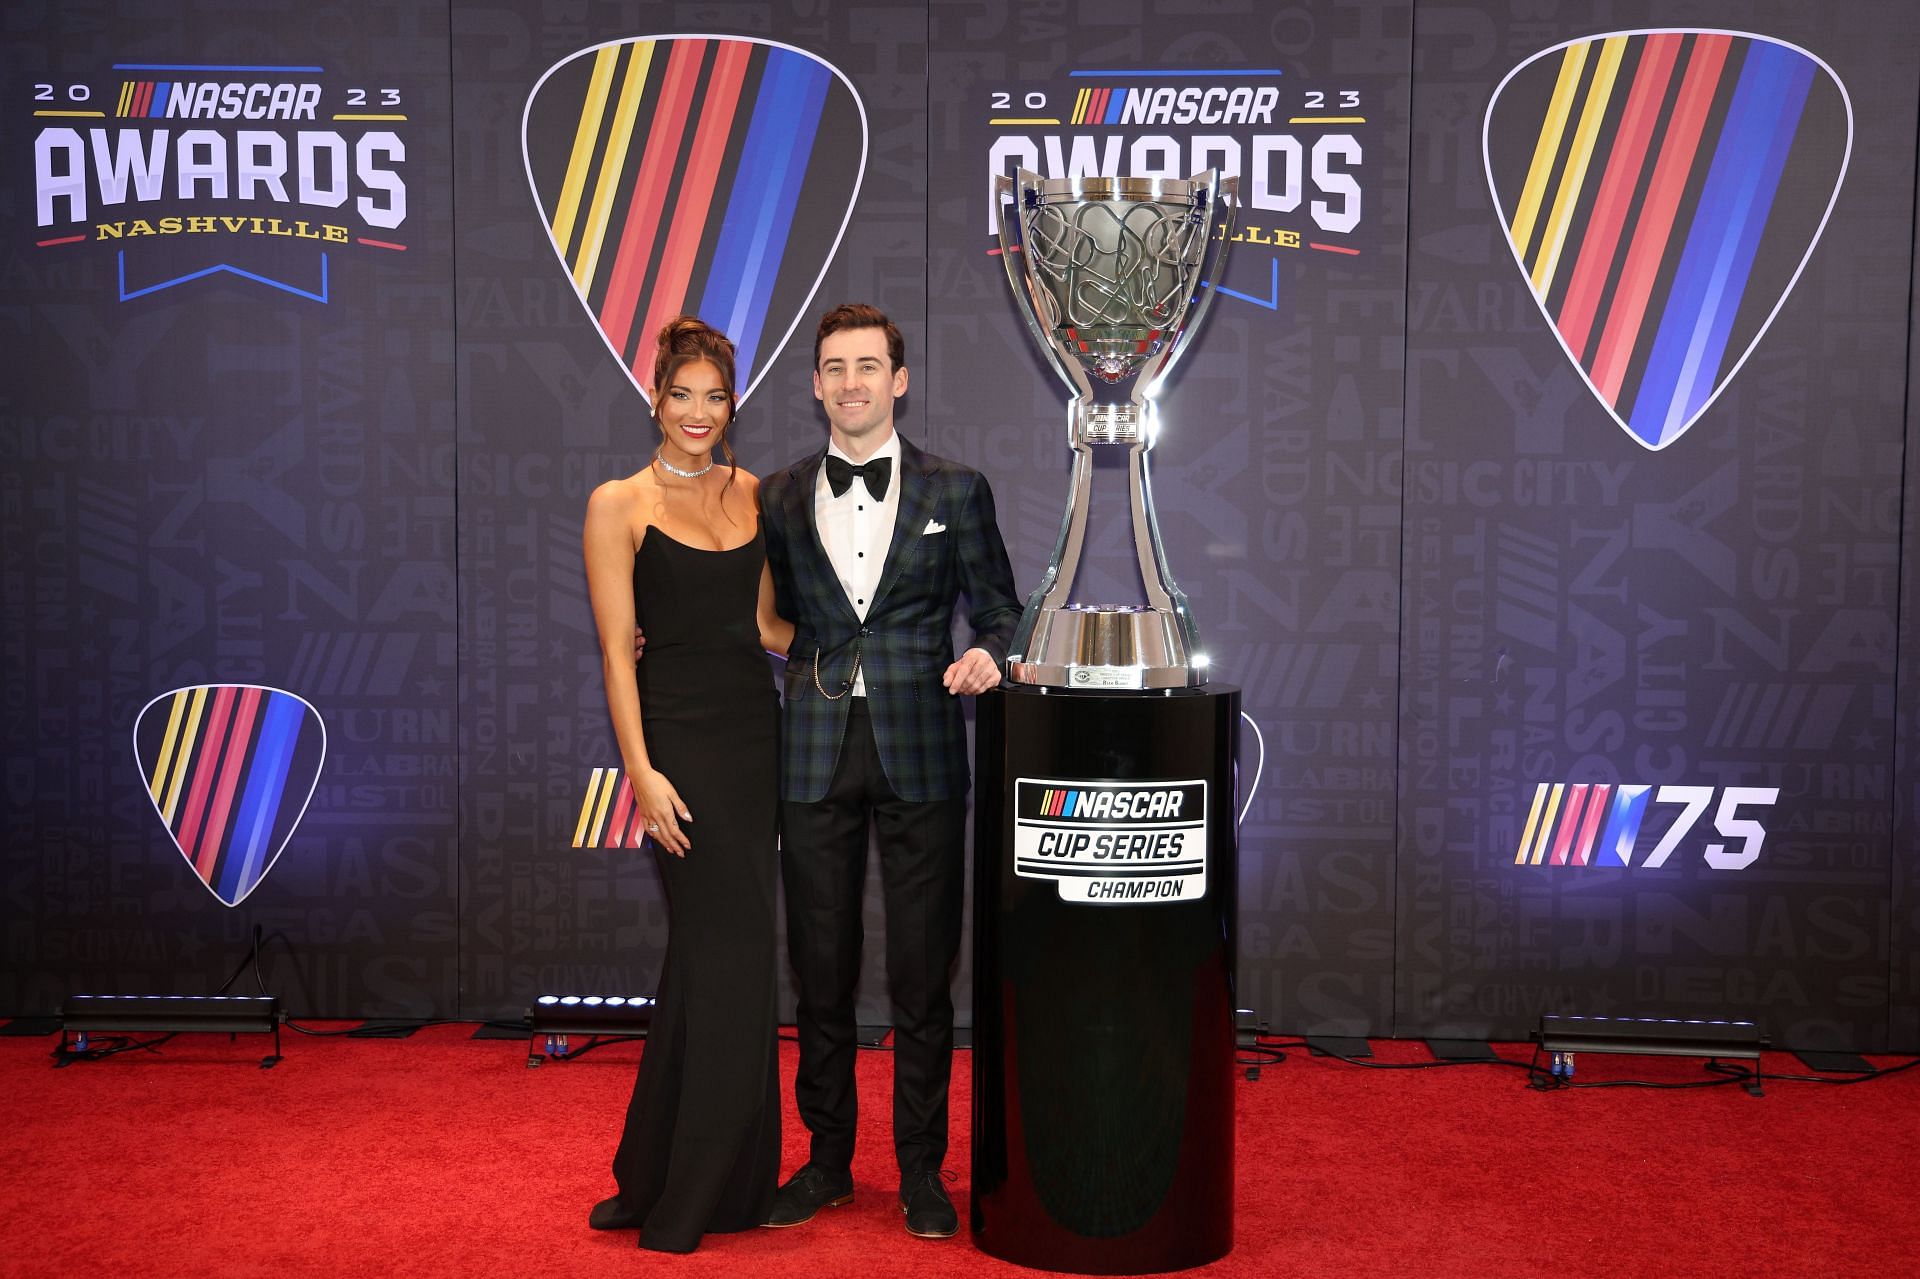 NASCAR Awards and Champion Celebration